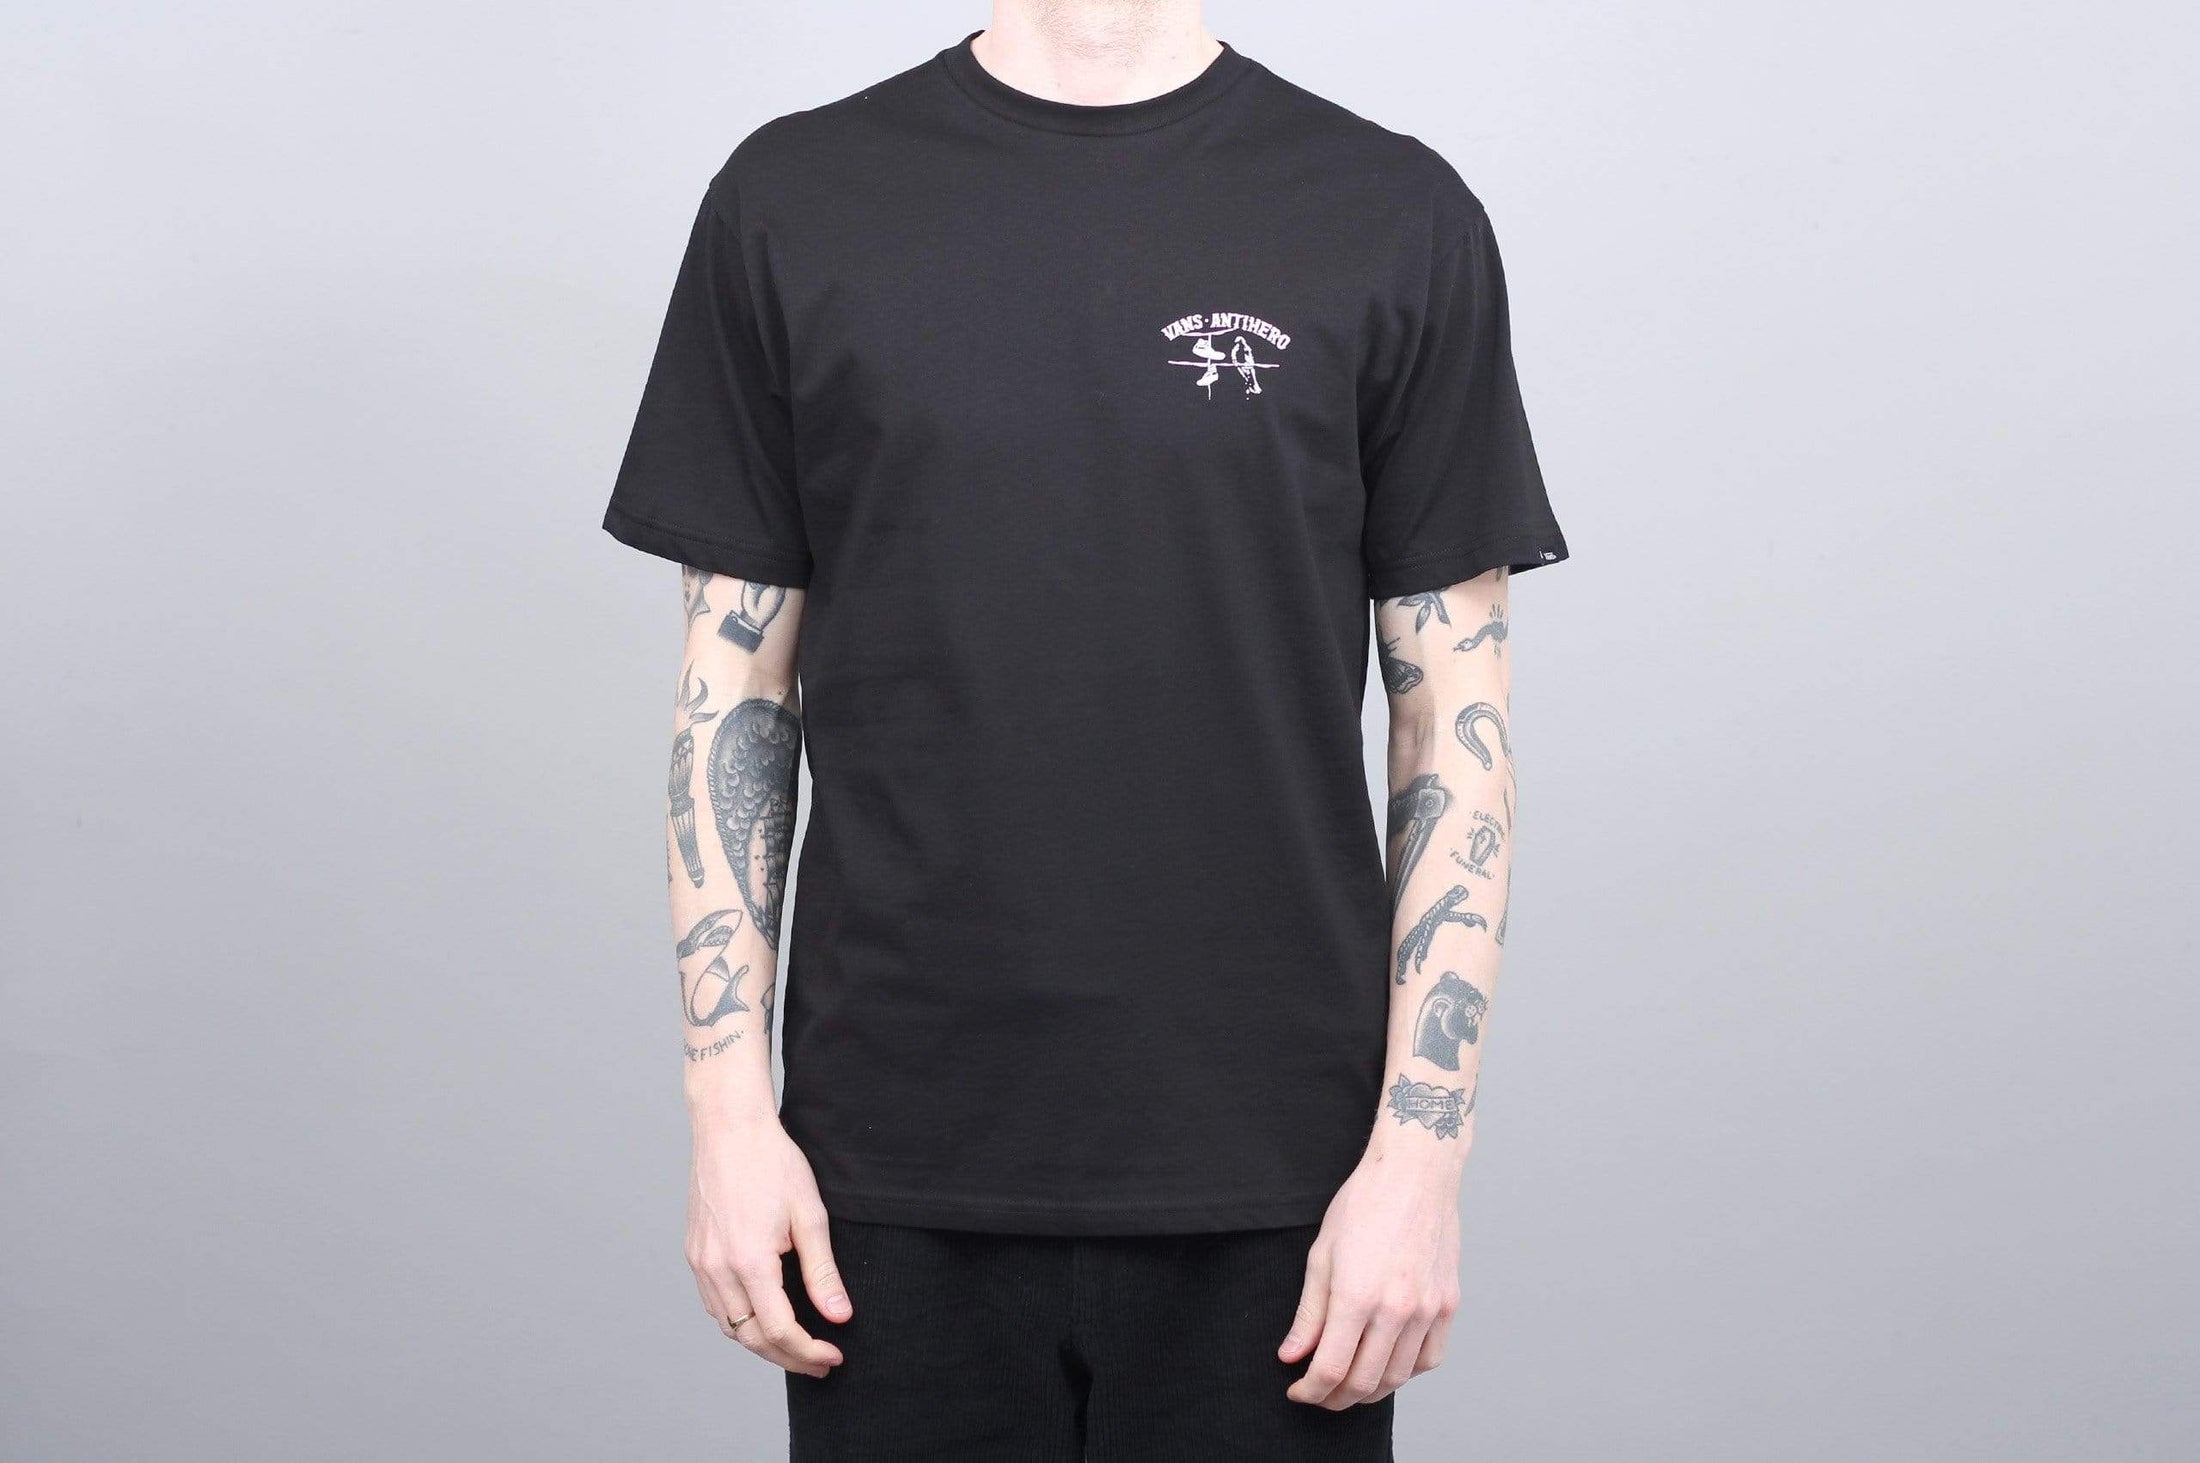 Vans x Anti-Hero T-Shirt Black